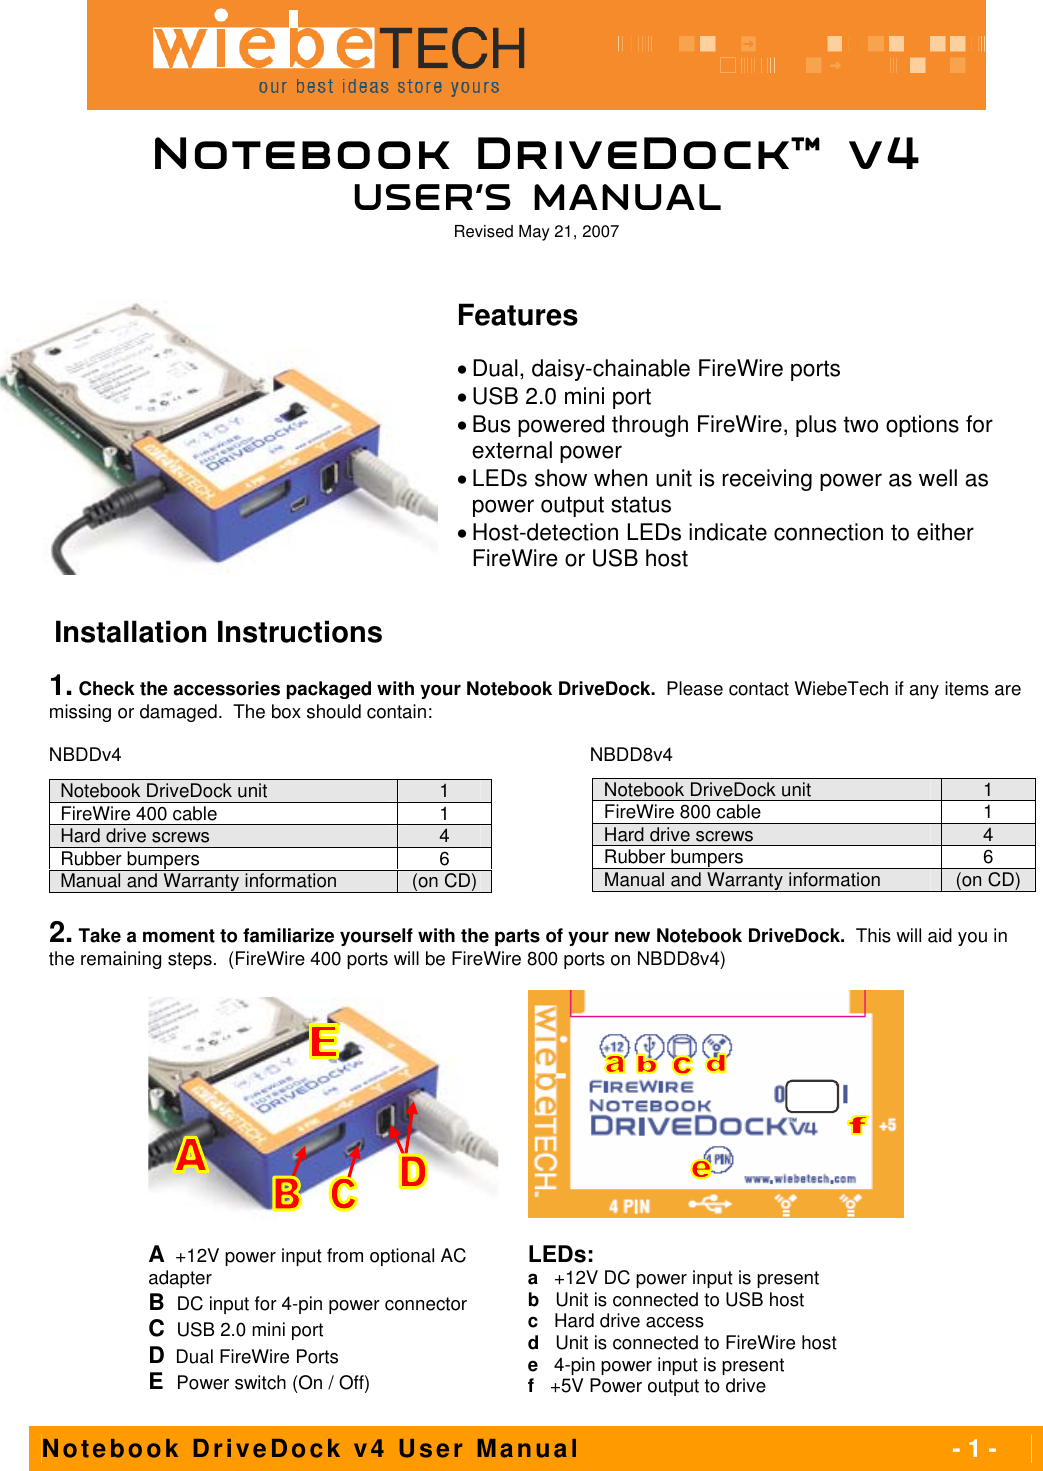 Page 1 of 4 - Wiebetech Wiebetech-Nbddv4-Users-Manual- Notebook DriveDock V4 User's Manual  Wiebetech-nbddv4-users-manual